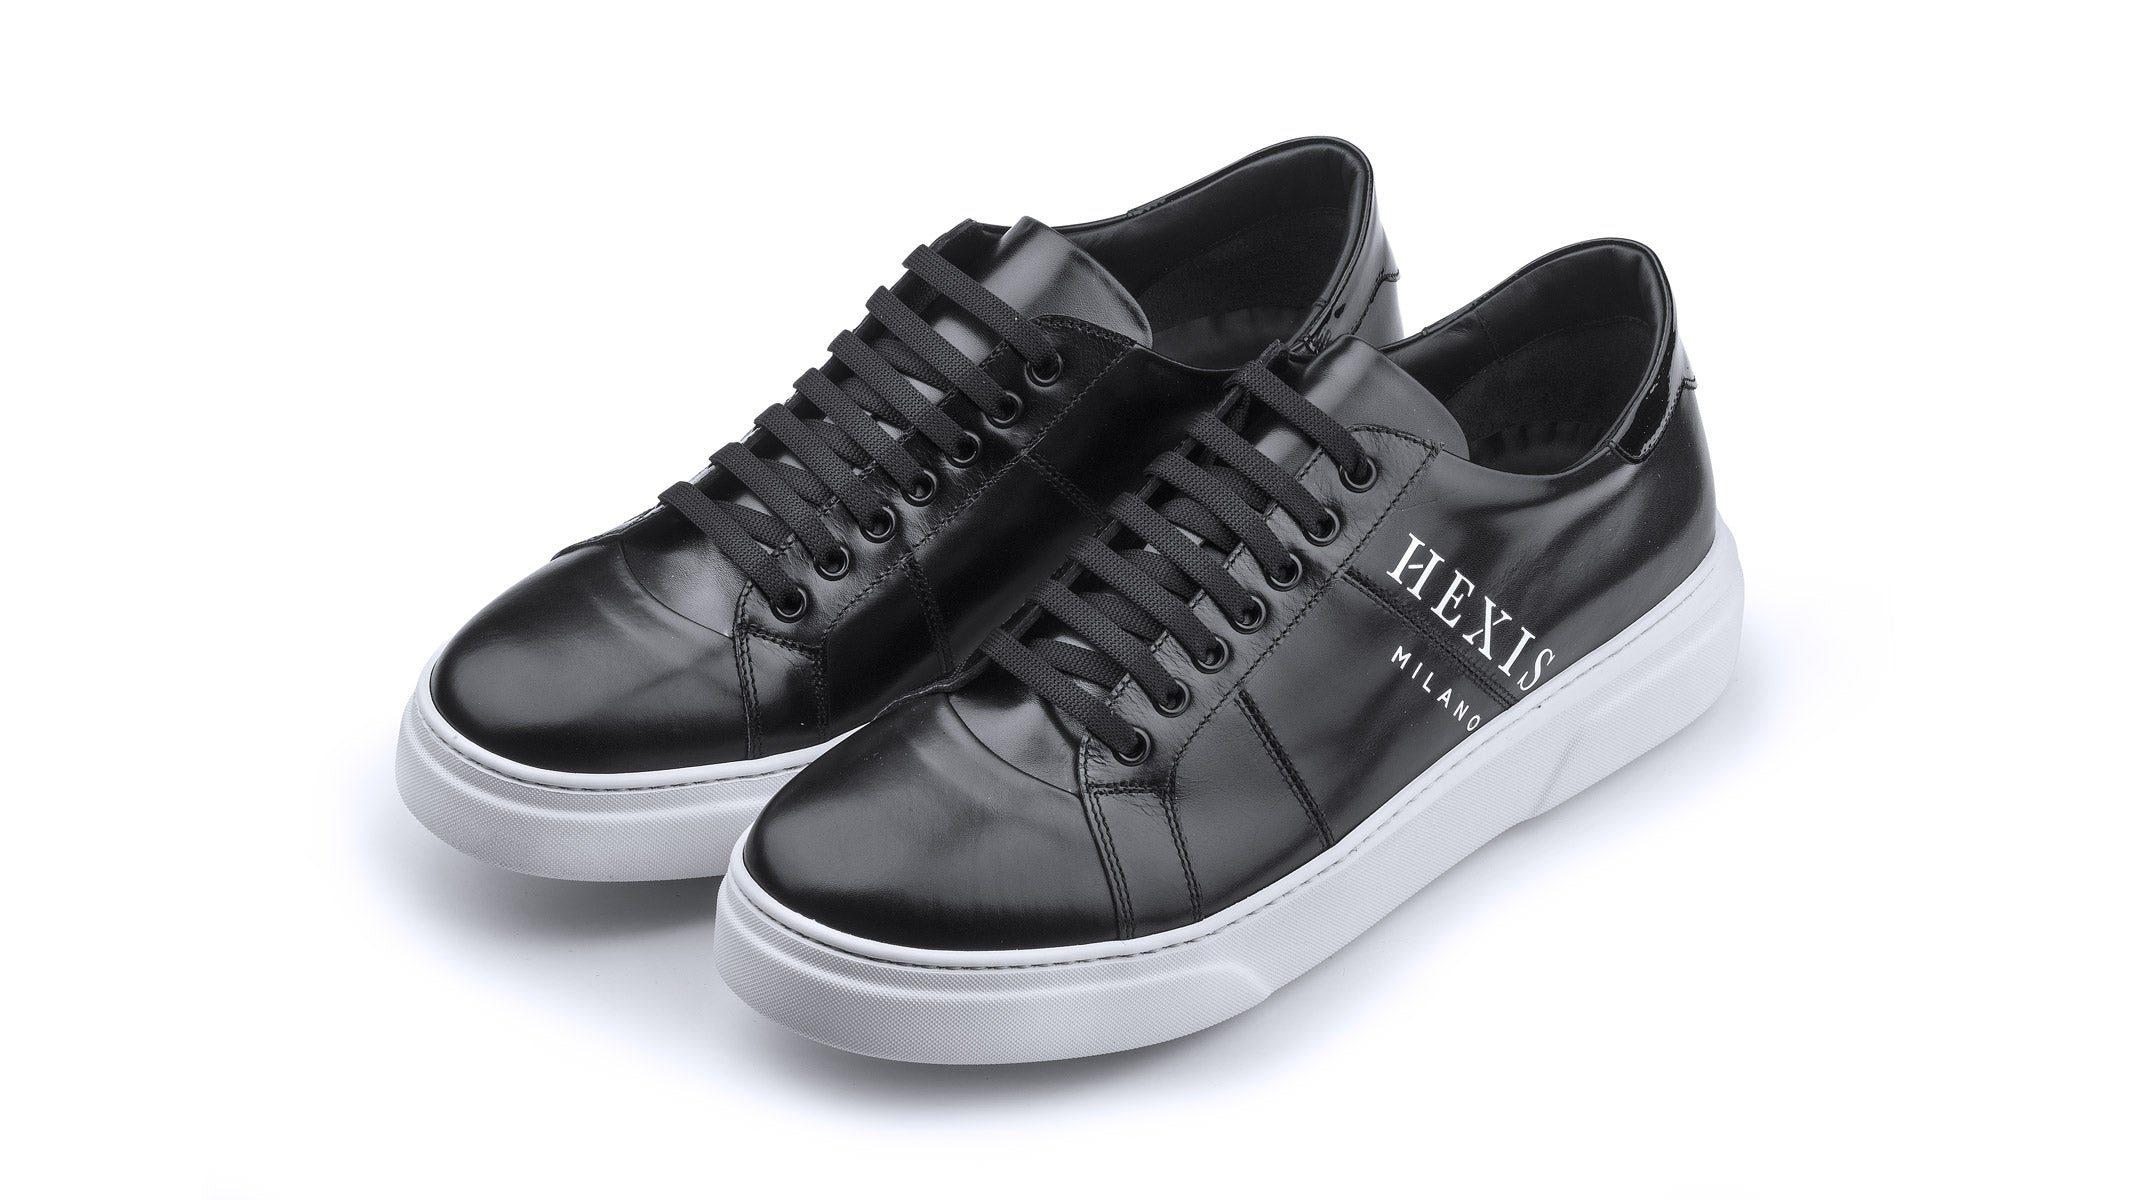 Hexis sneakers in black leather